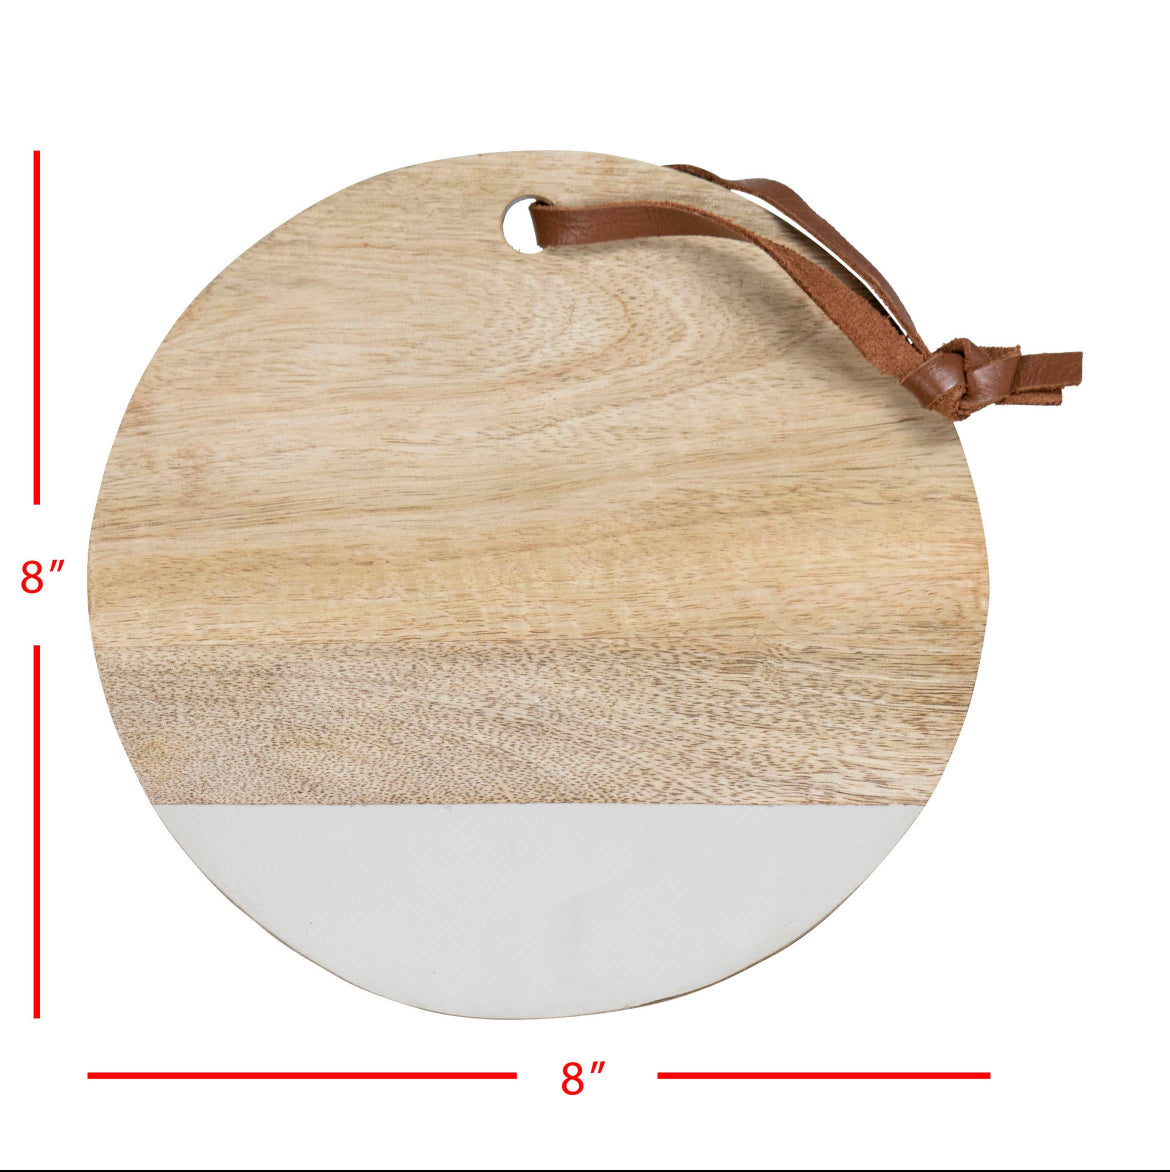 Mini Wooden Charcuterie/Cutting Board